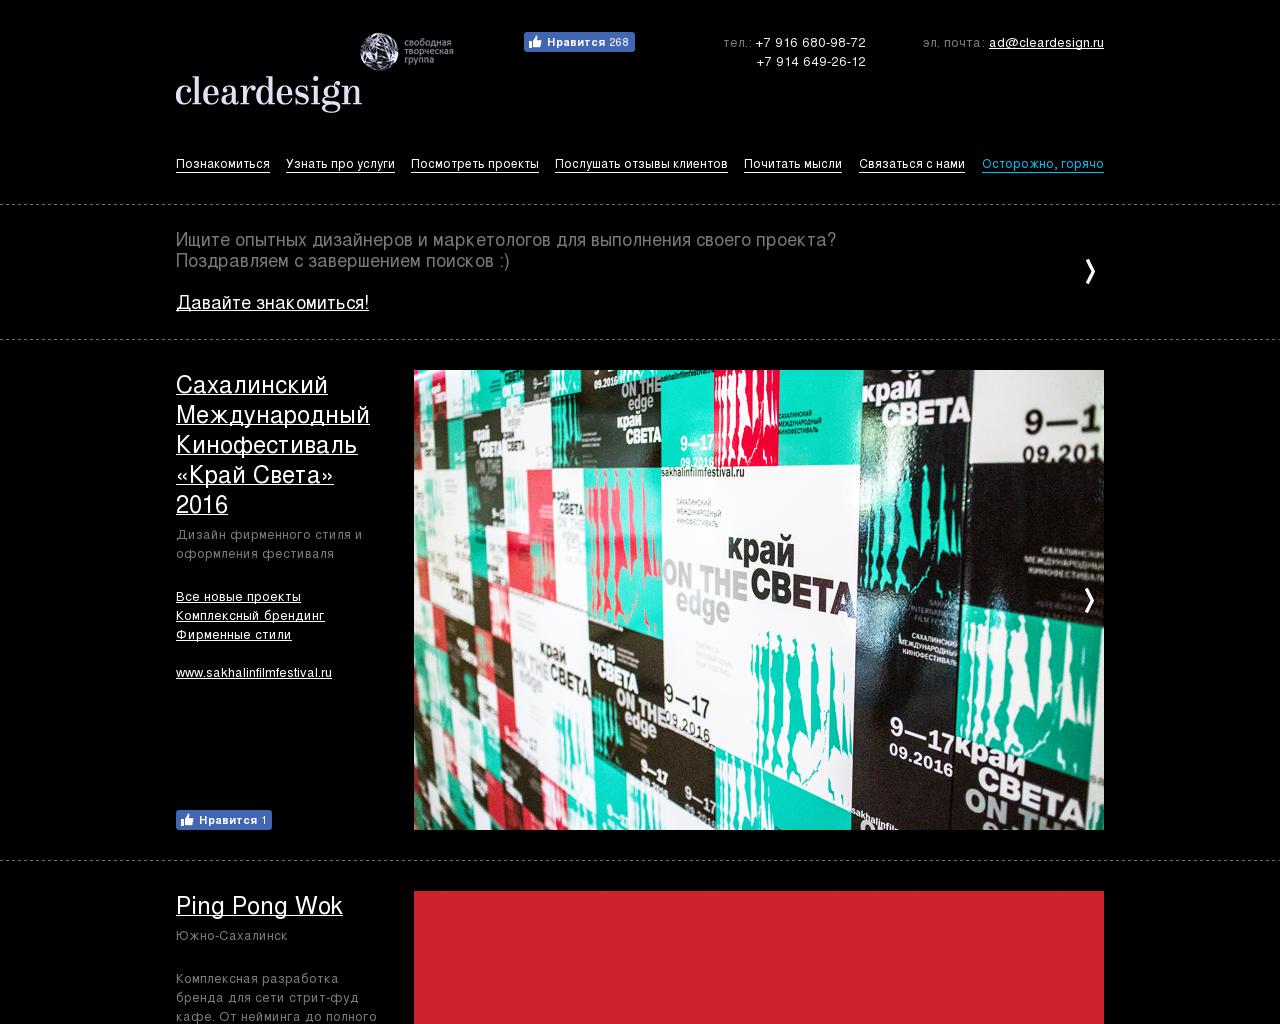 Изображение сайта cleardesign.ru в разрешении 1280x1024